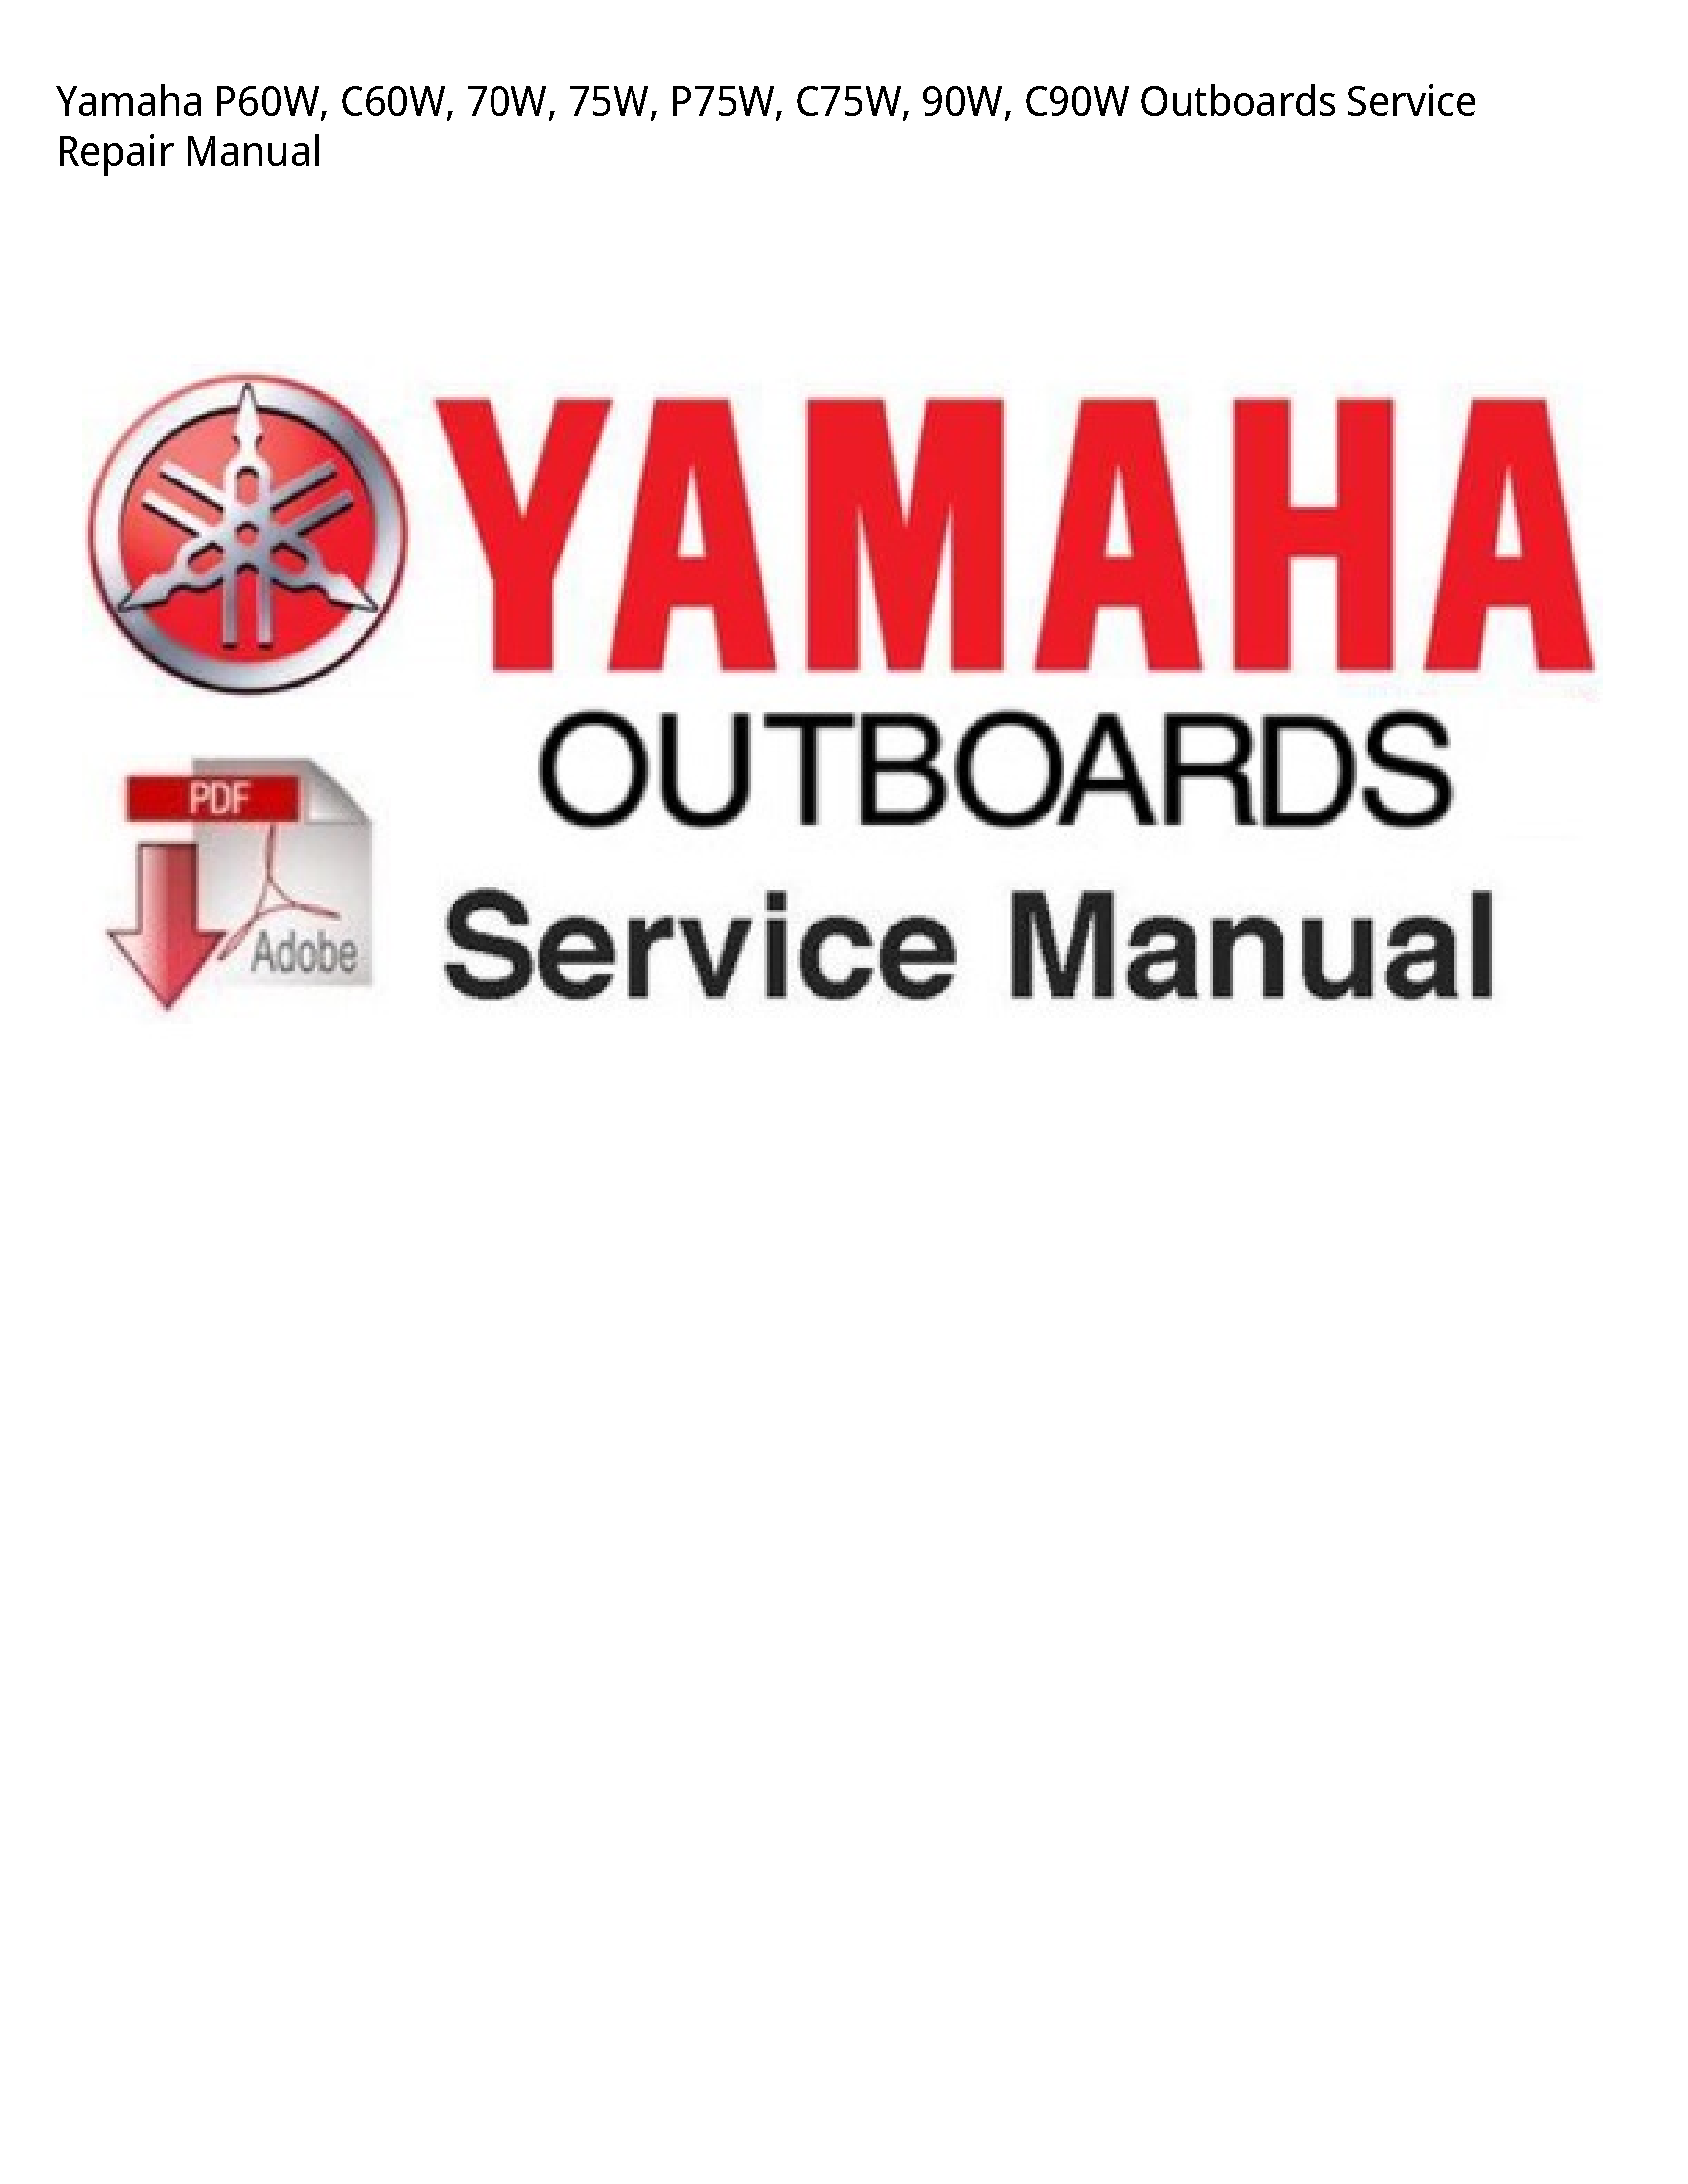 Yamaha P60W Outboards manual